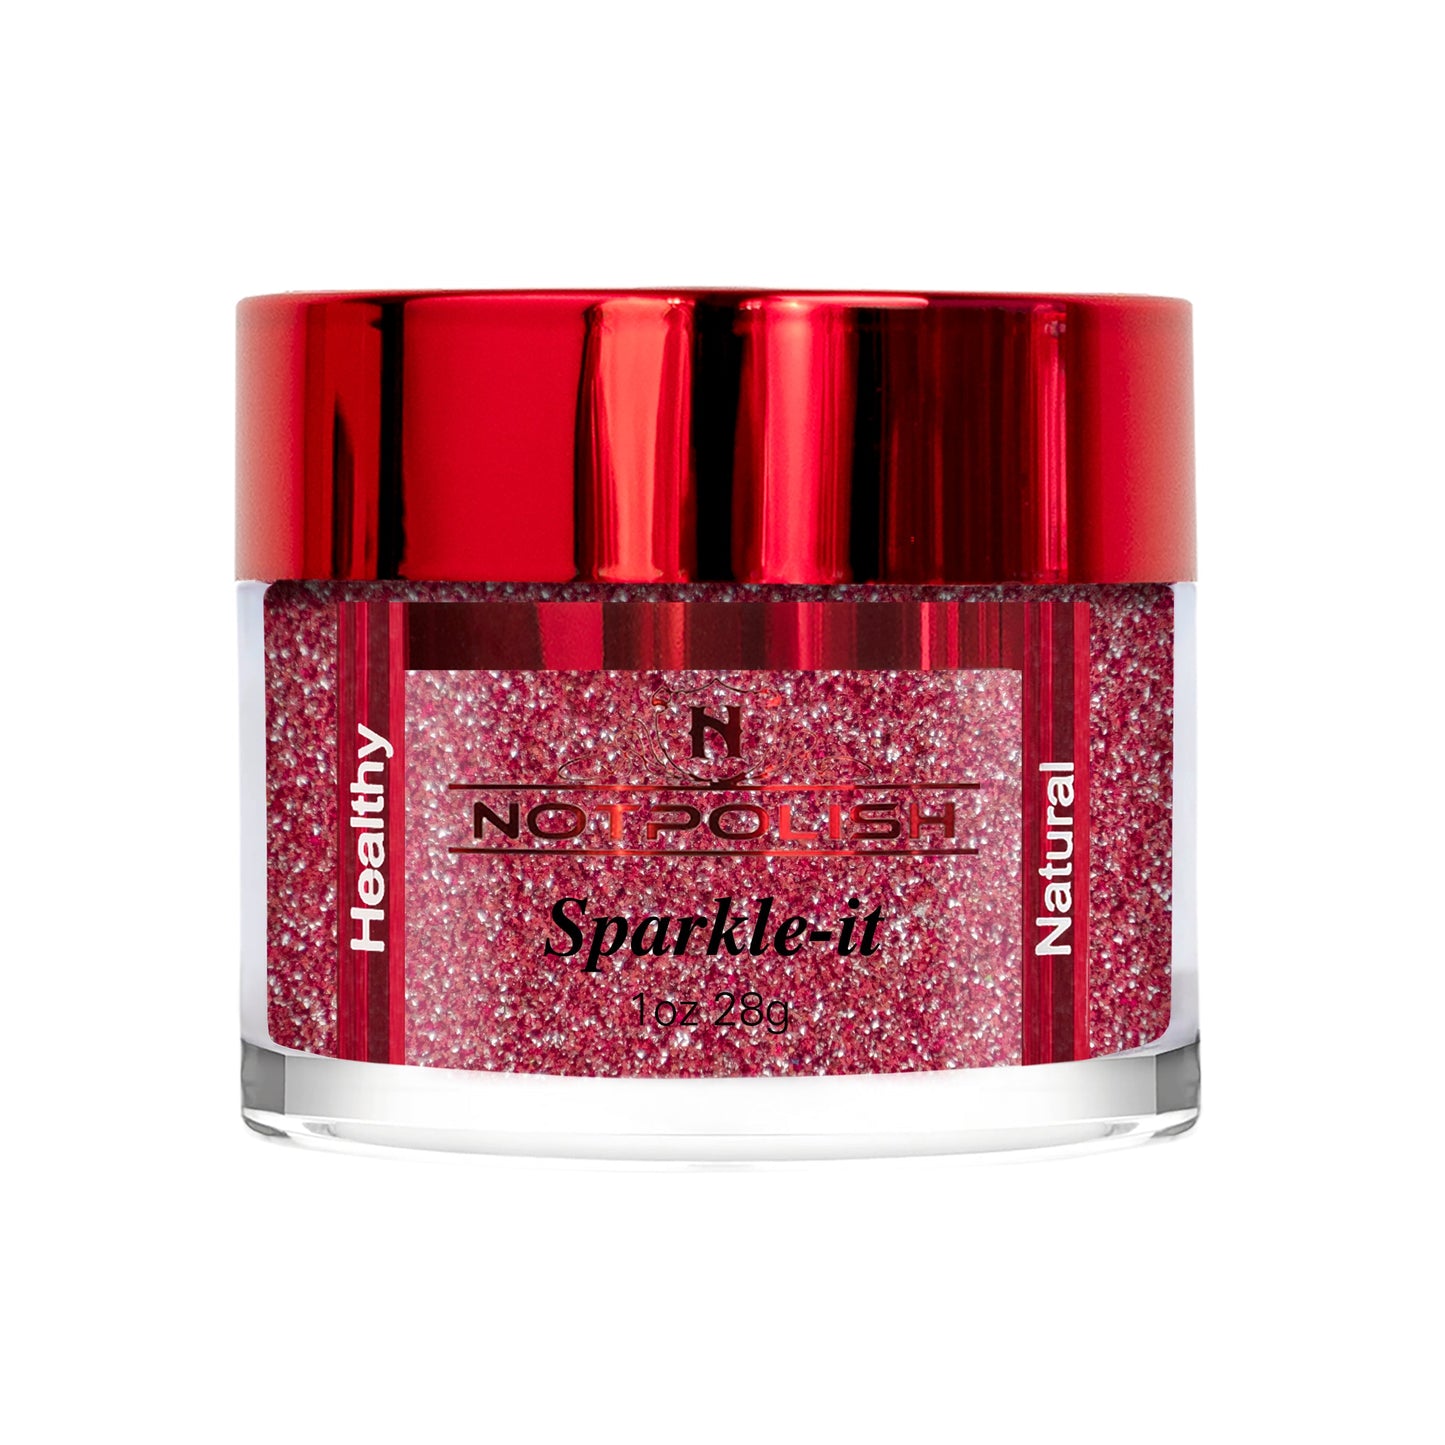 ST04 4 Ever Sparkle-it Powder by Notpolish